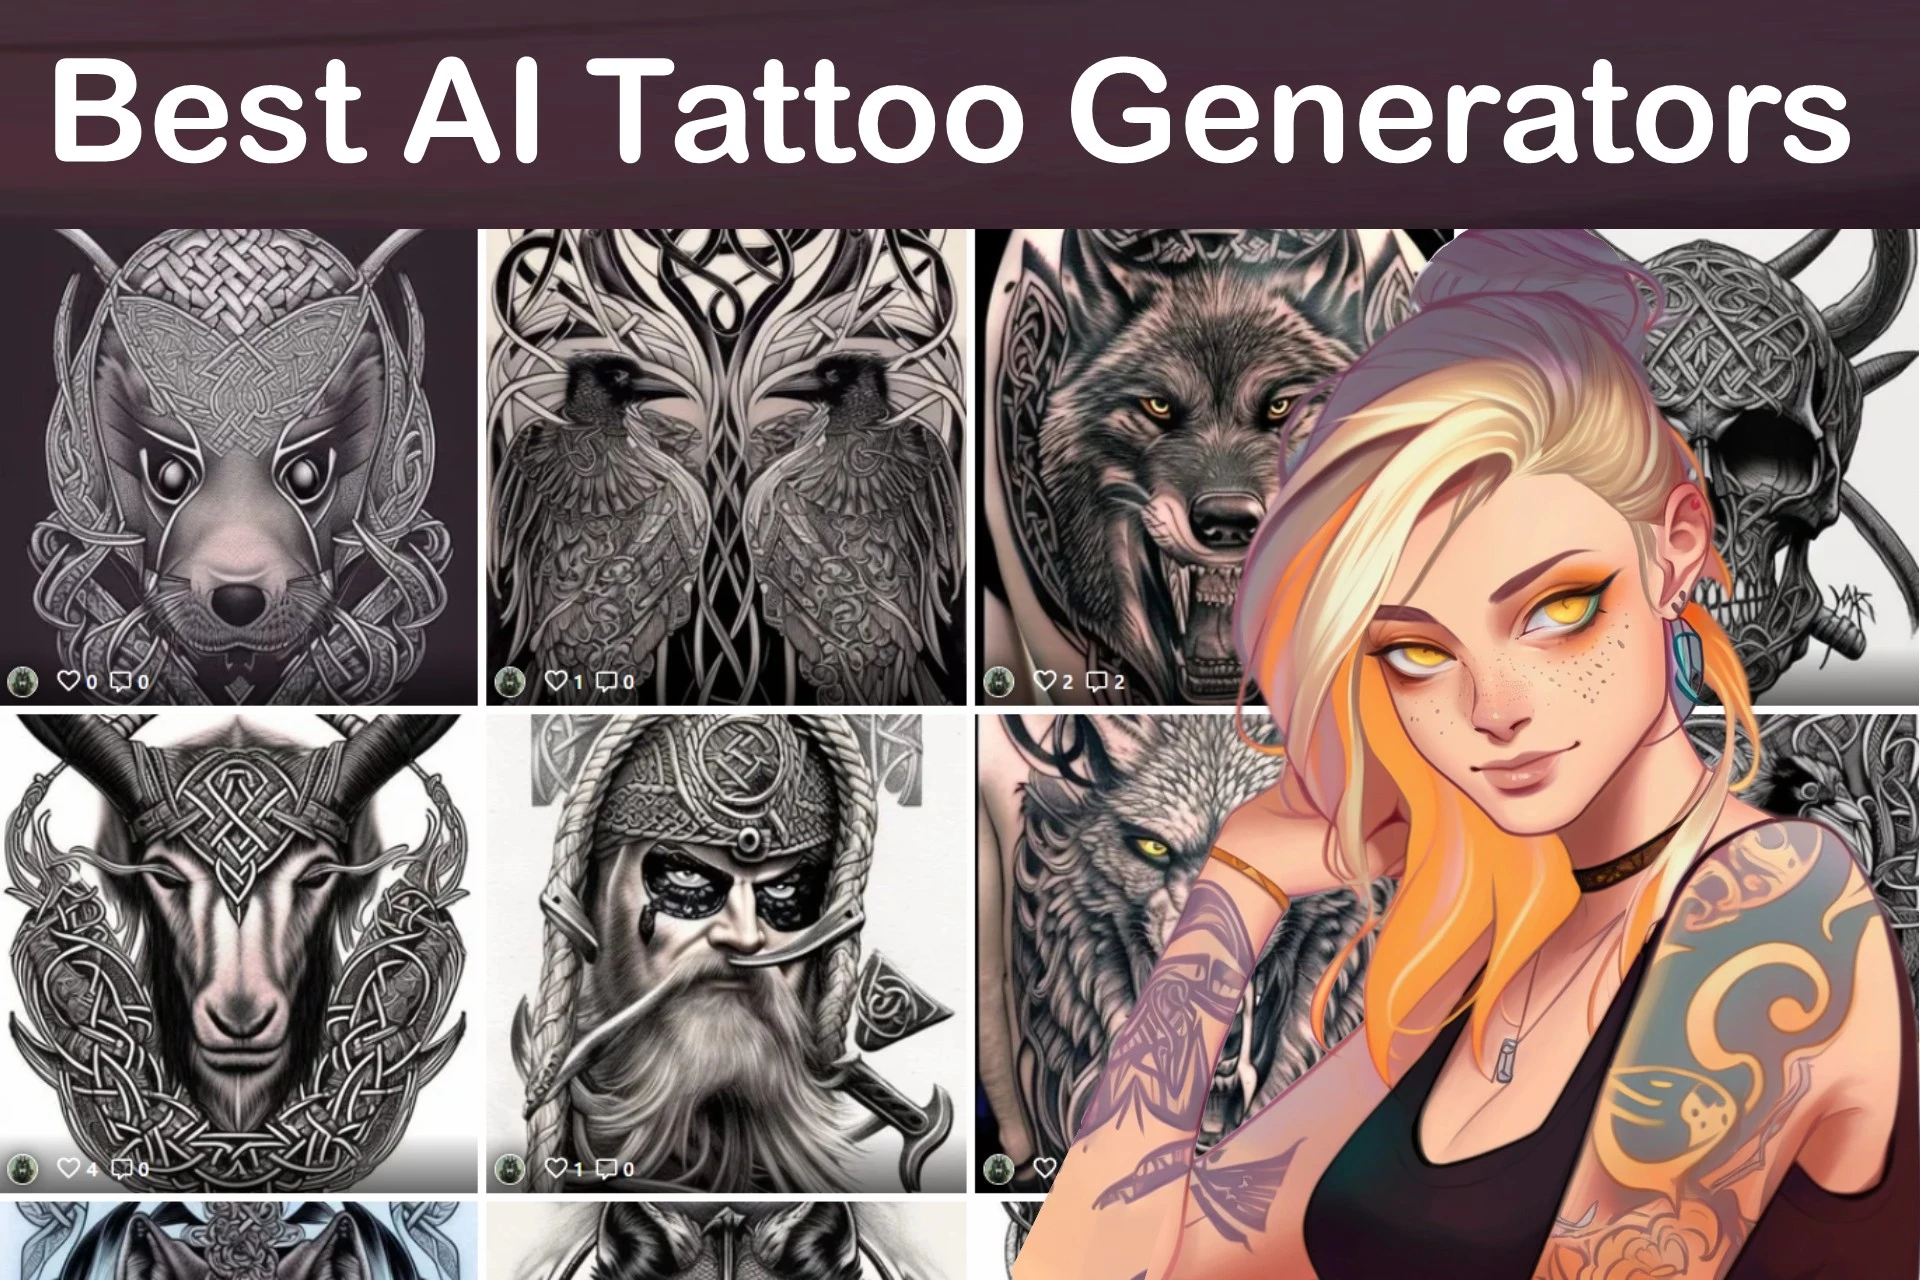 What tattoo should i get generator